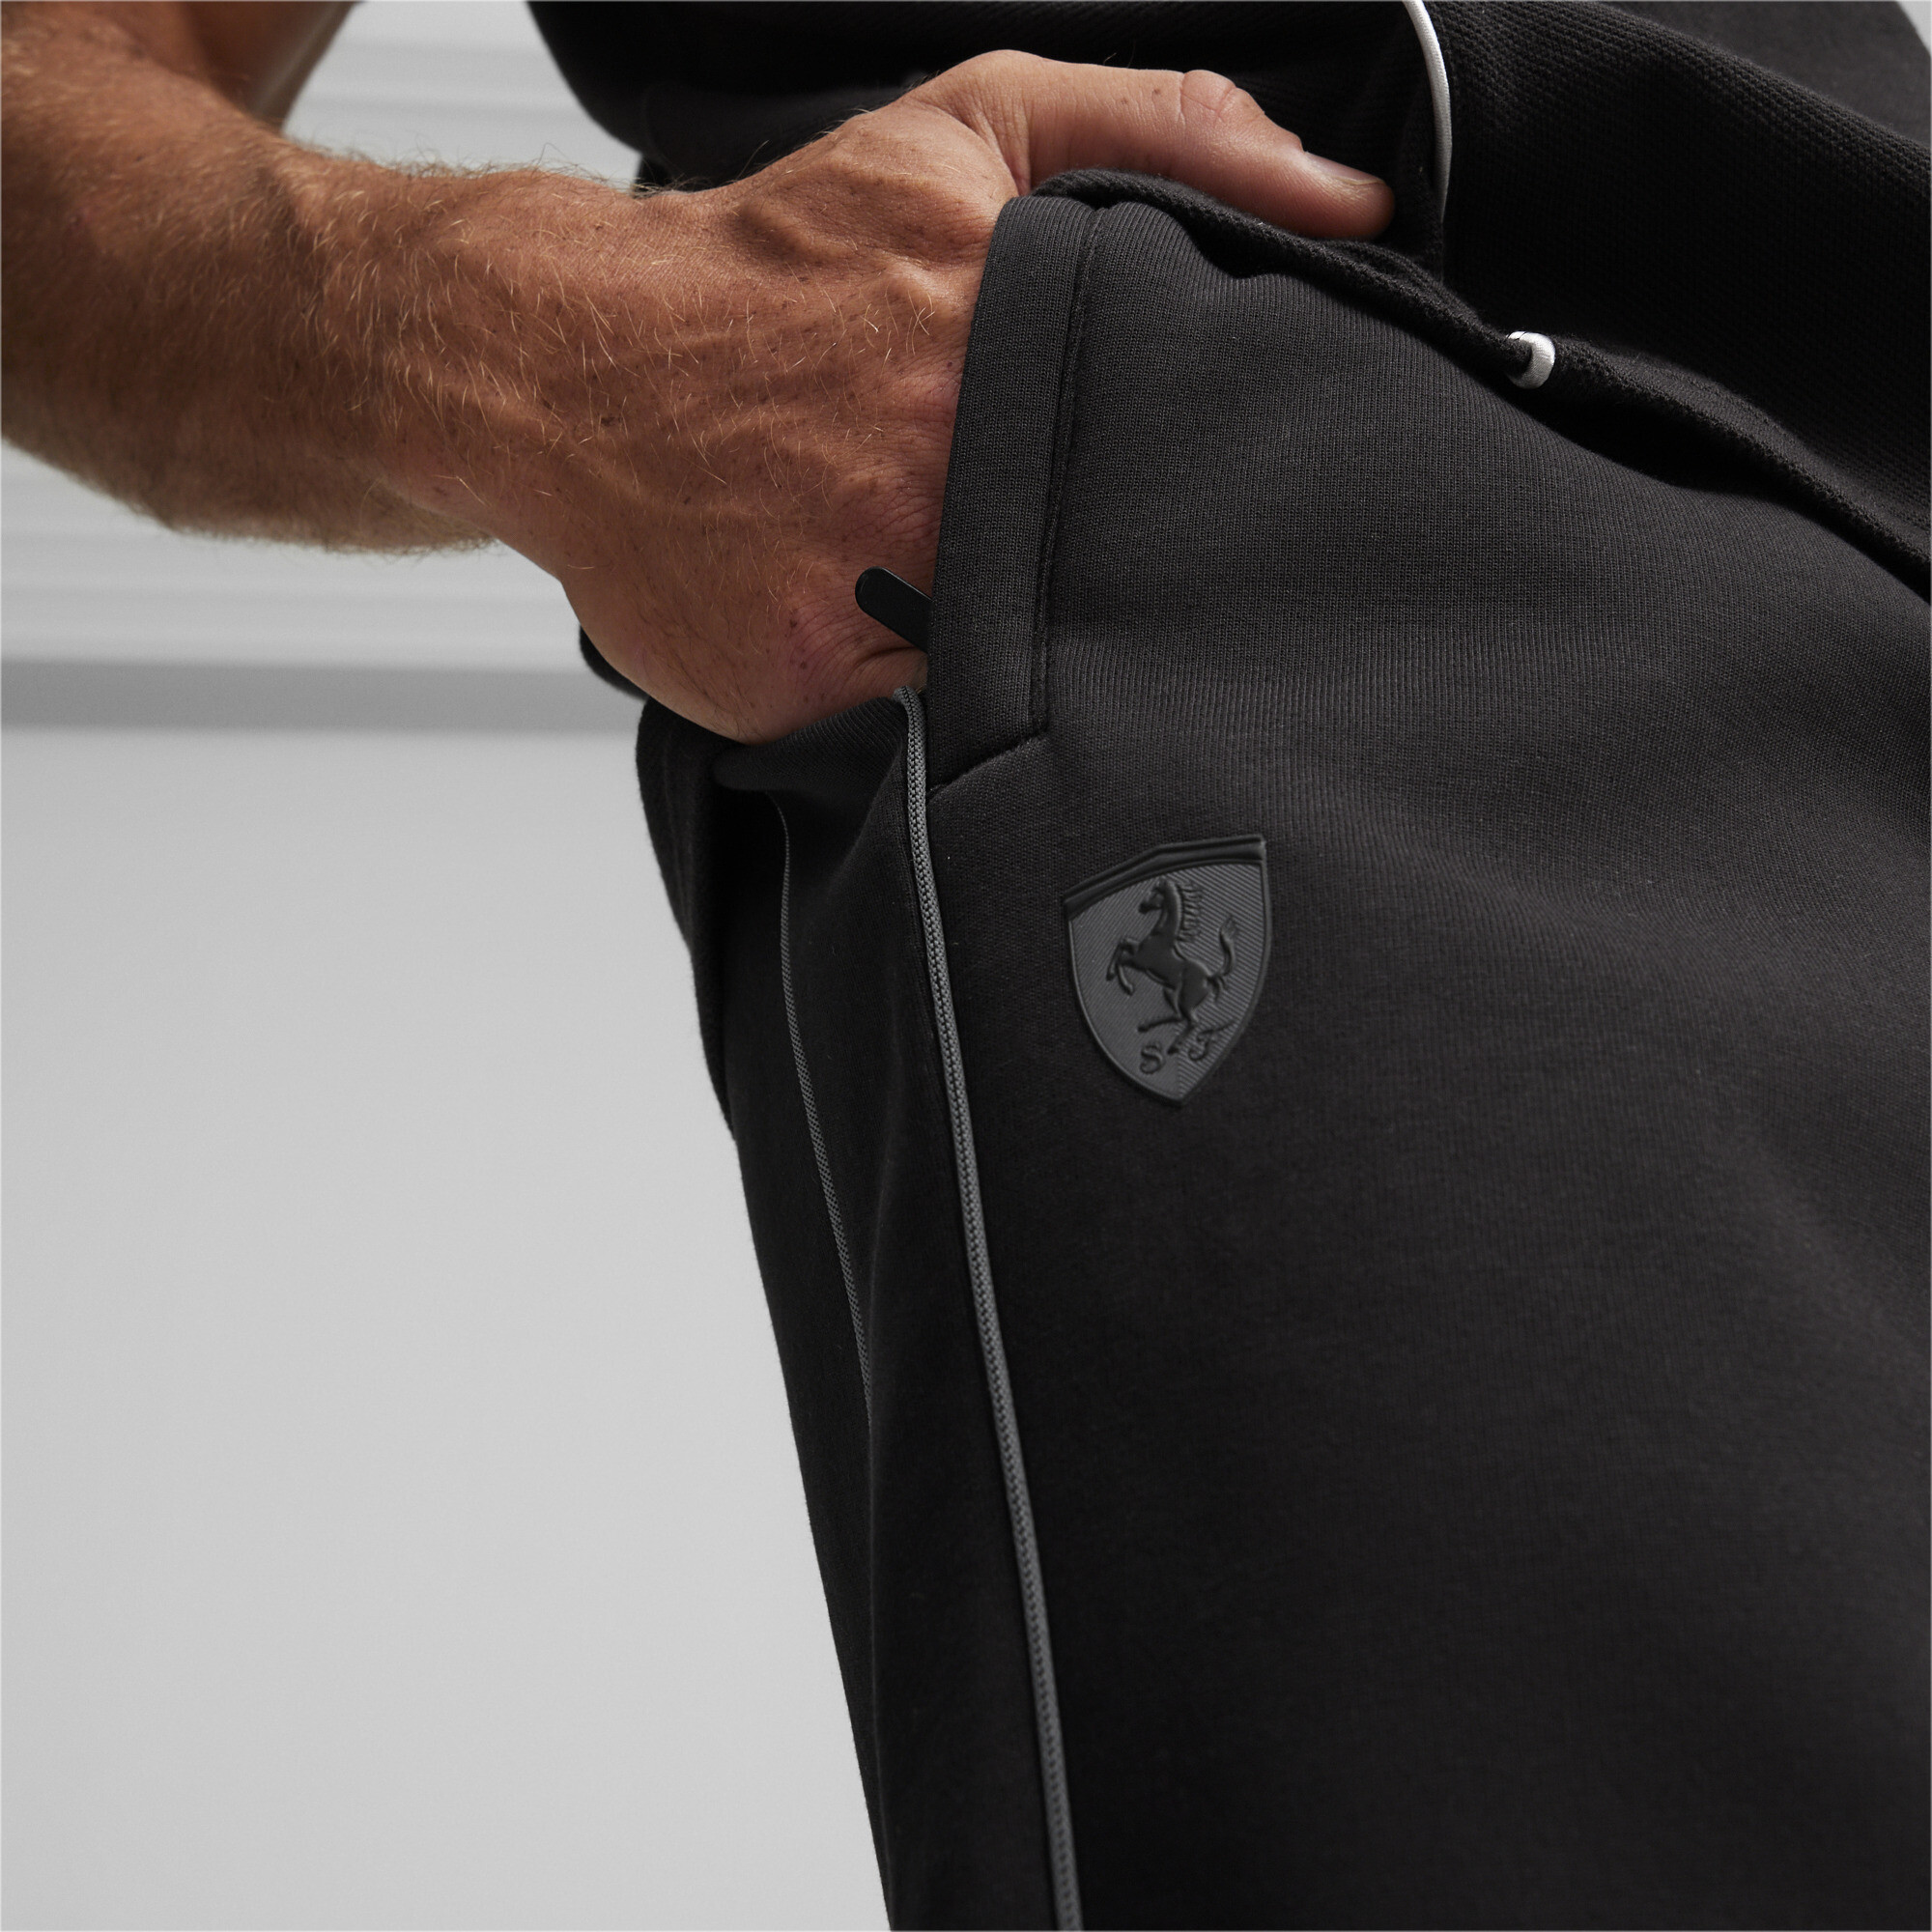 Men's Puma Scuderia Ferrari Style's Motorsport MT7 Pants, Black, Size M, Sport